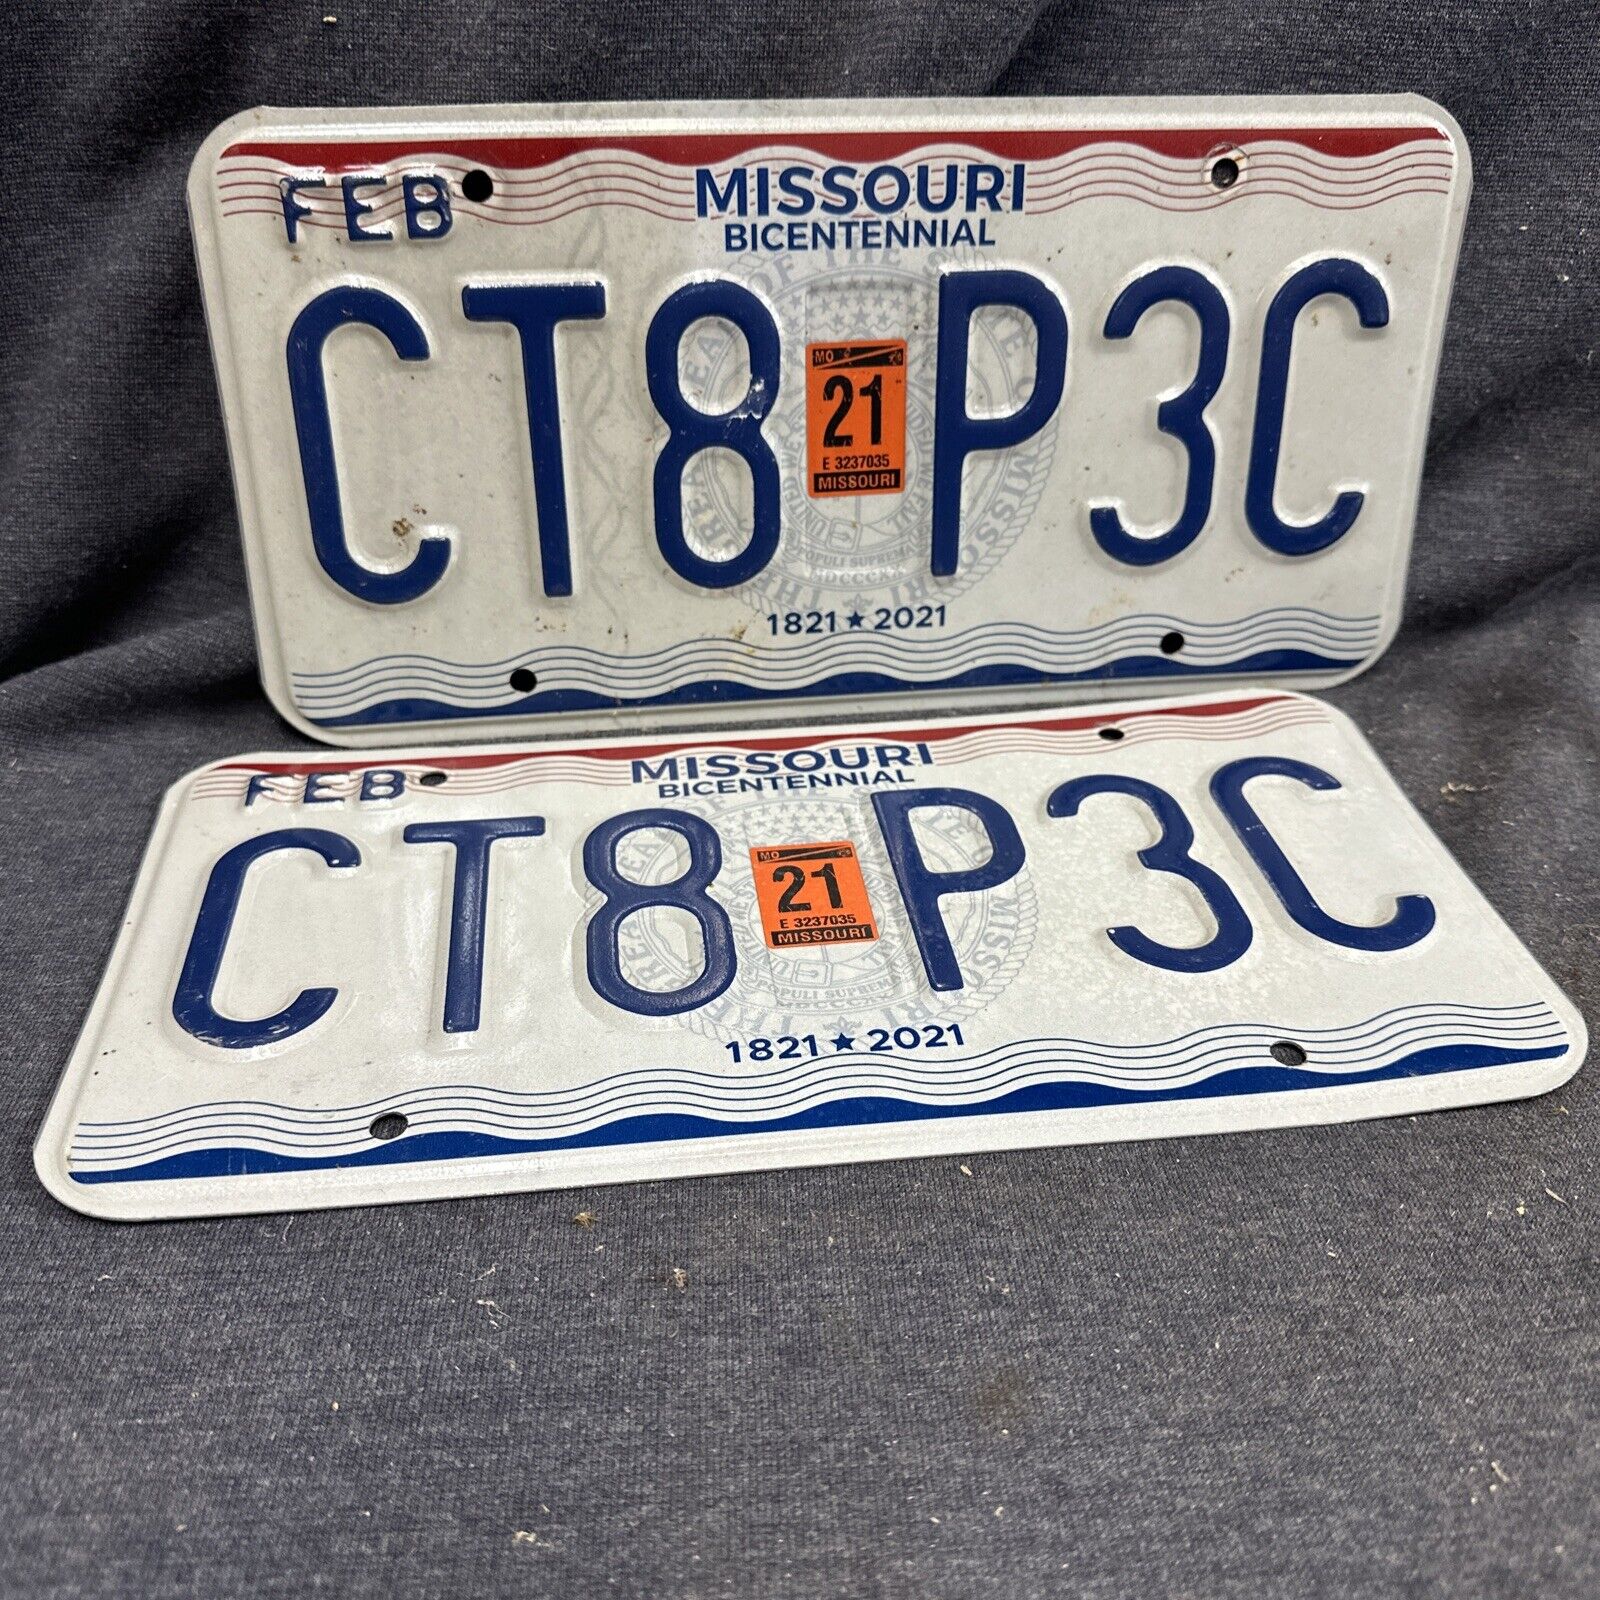 Missouri Bicentennial 1821-2021 Automobile License Plate Set Of 2 - CT8 P3C Feb